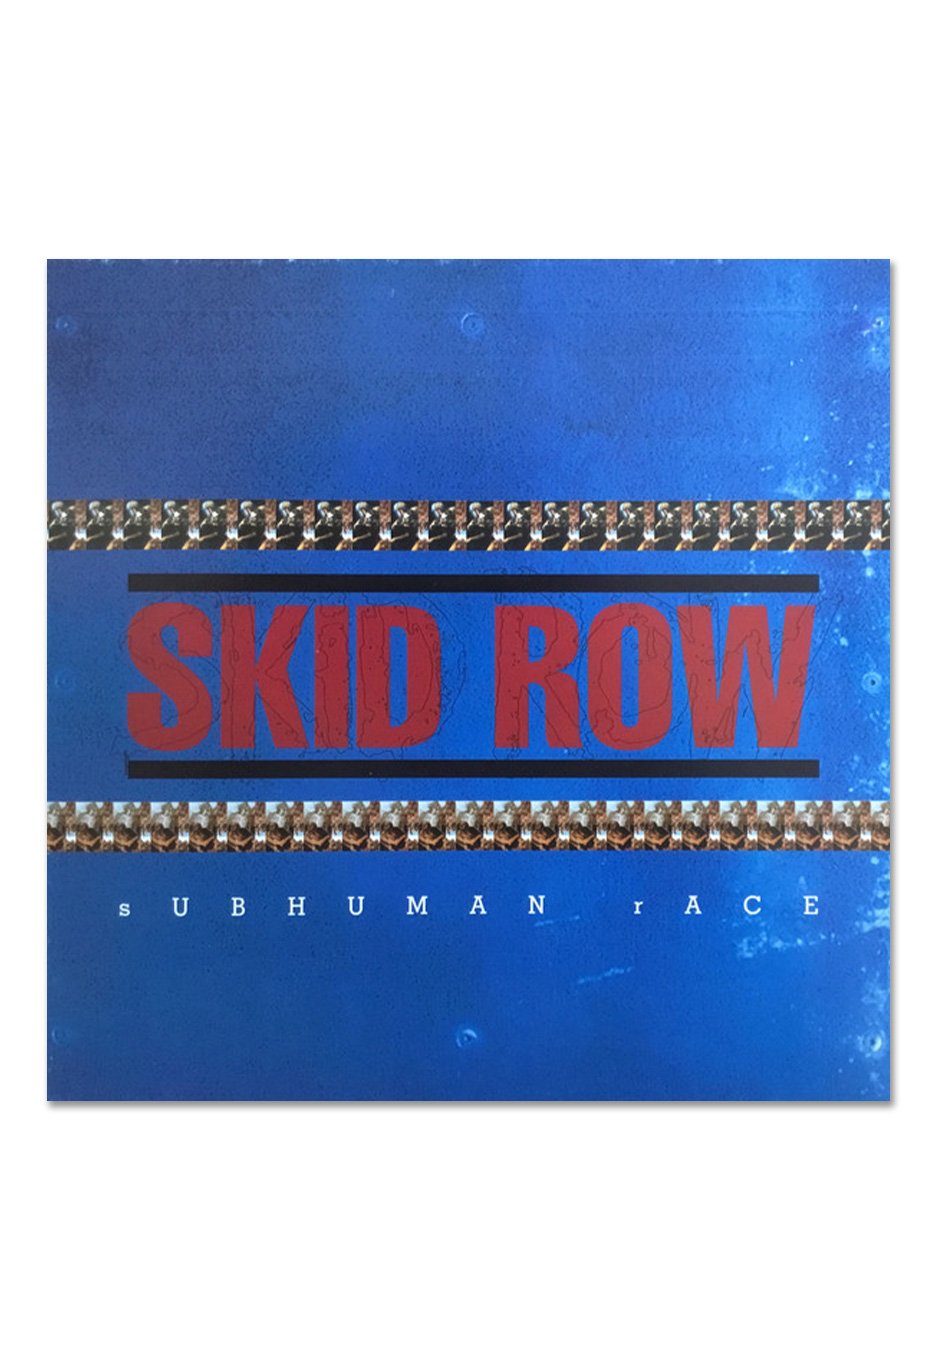 Skid Row - Subhuman Race Blue/Black - Marbled 2 Vinyl